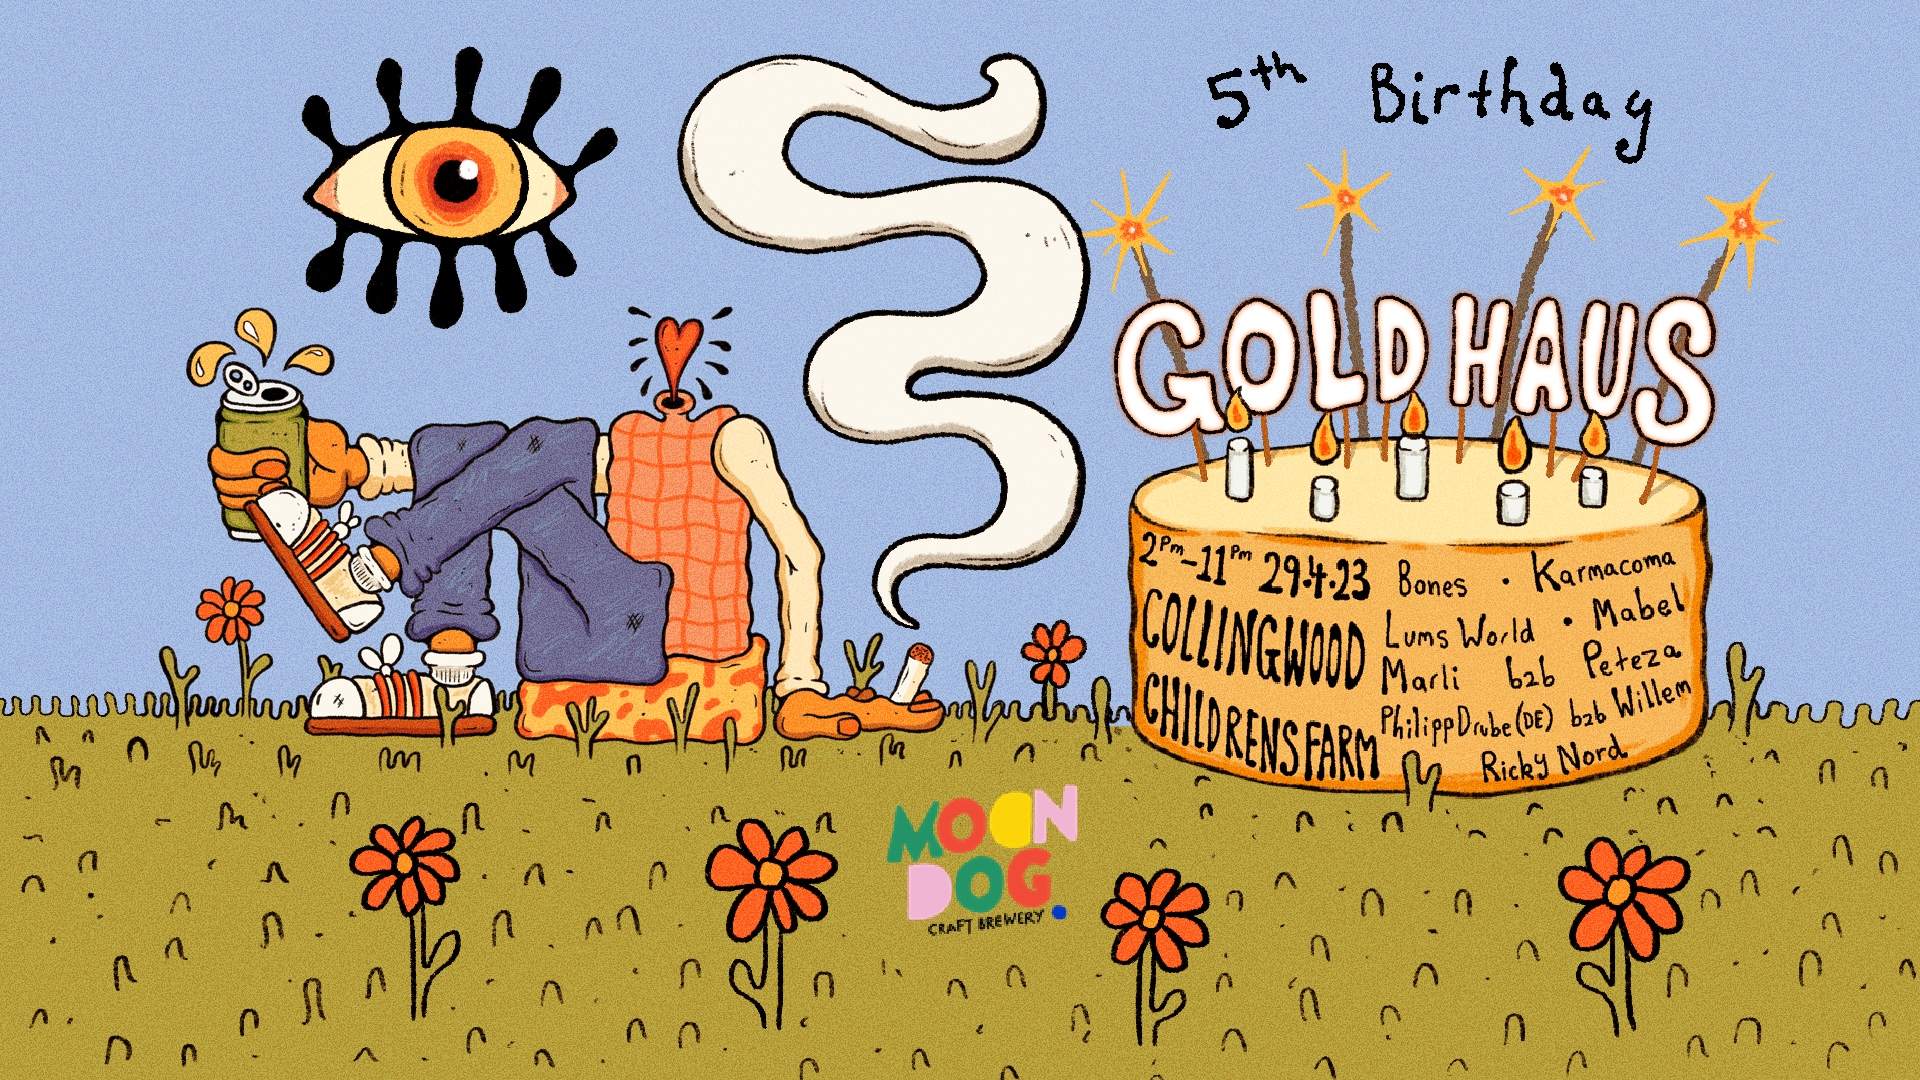 Gold Haus 5th Birthday Day Party | Collingwood Children’s Farm - Página frontal